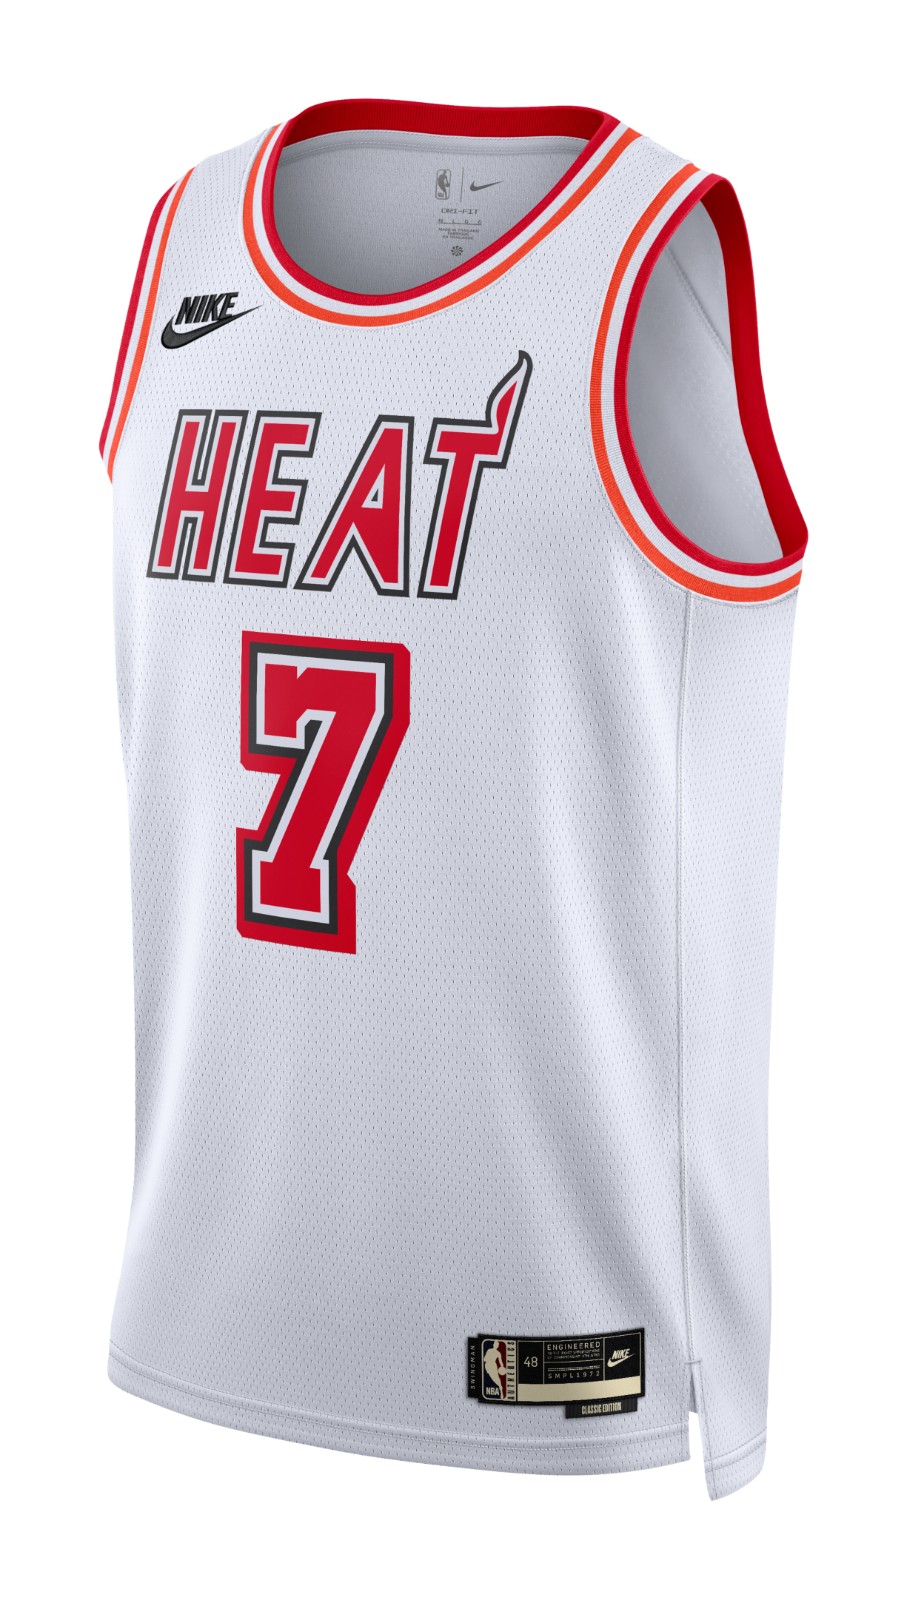 Miami Heat brings back original jerseys as Classic Edition